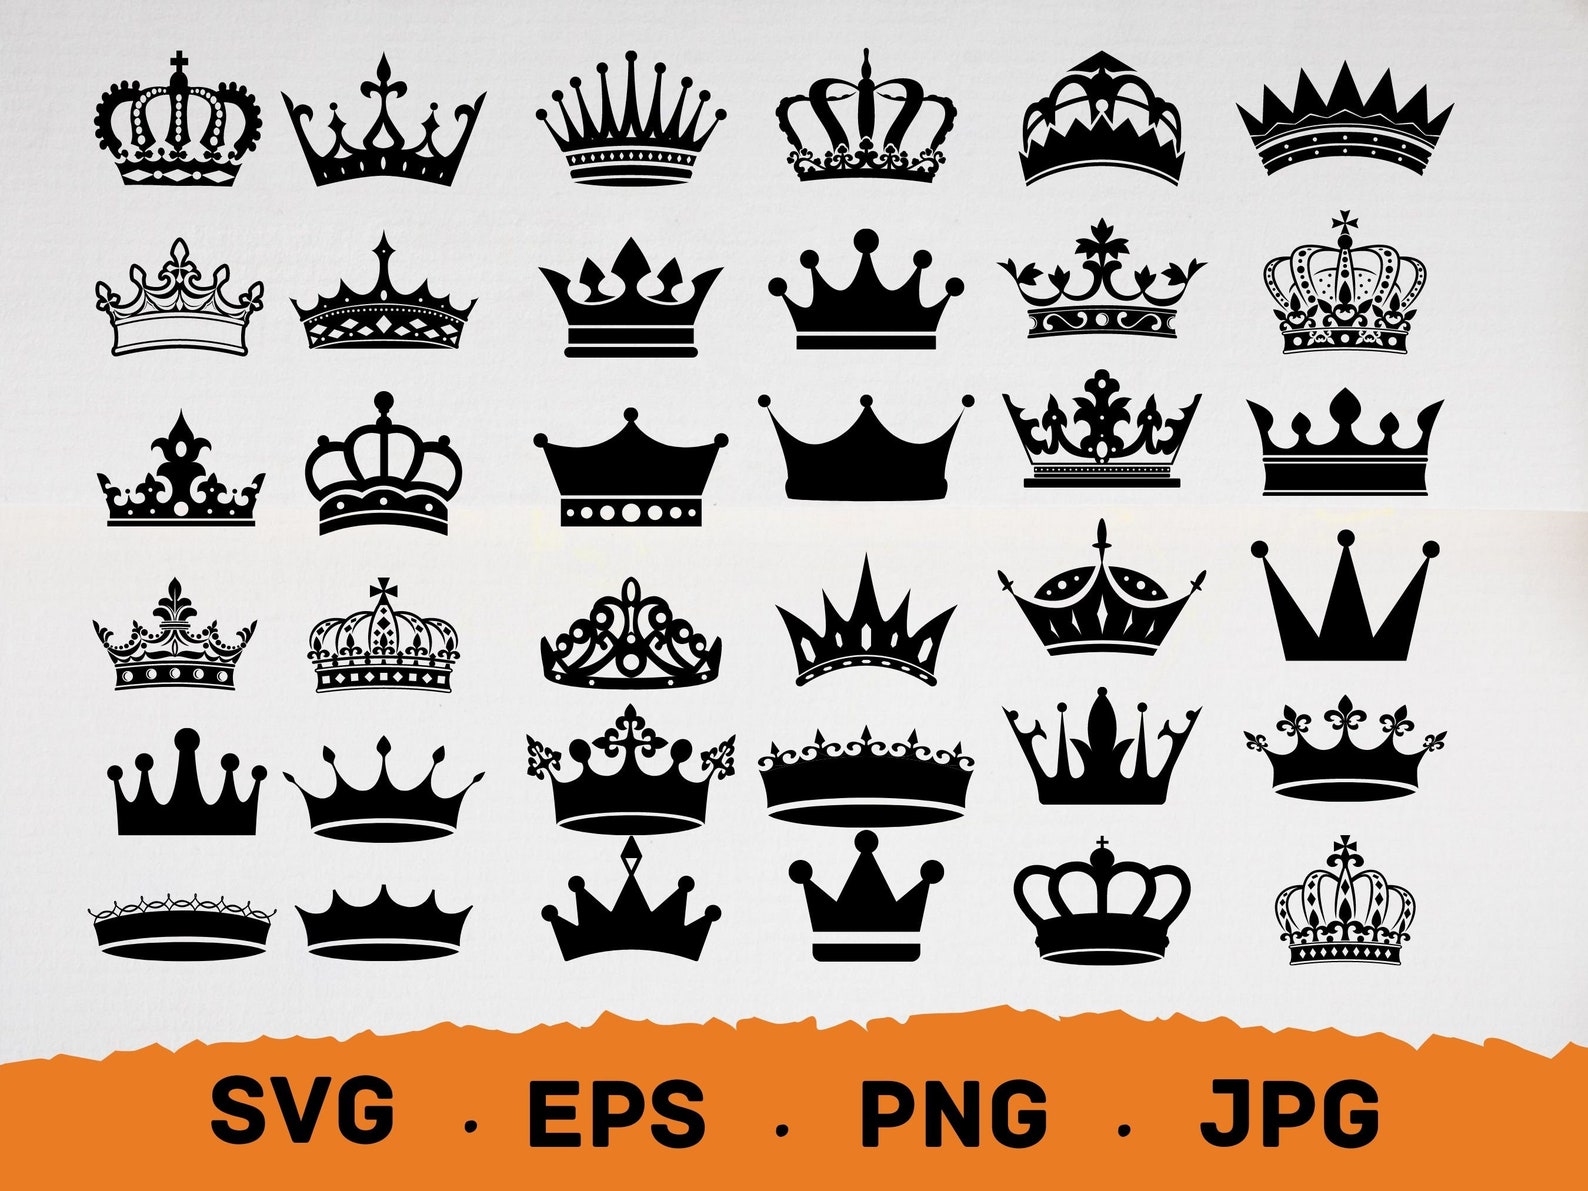 Big collection of dark crowns.